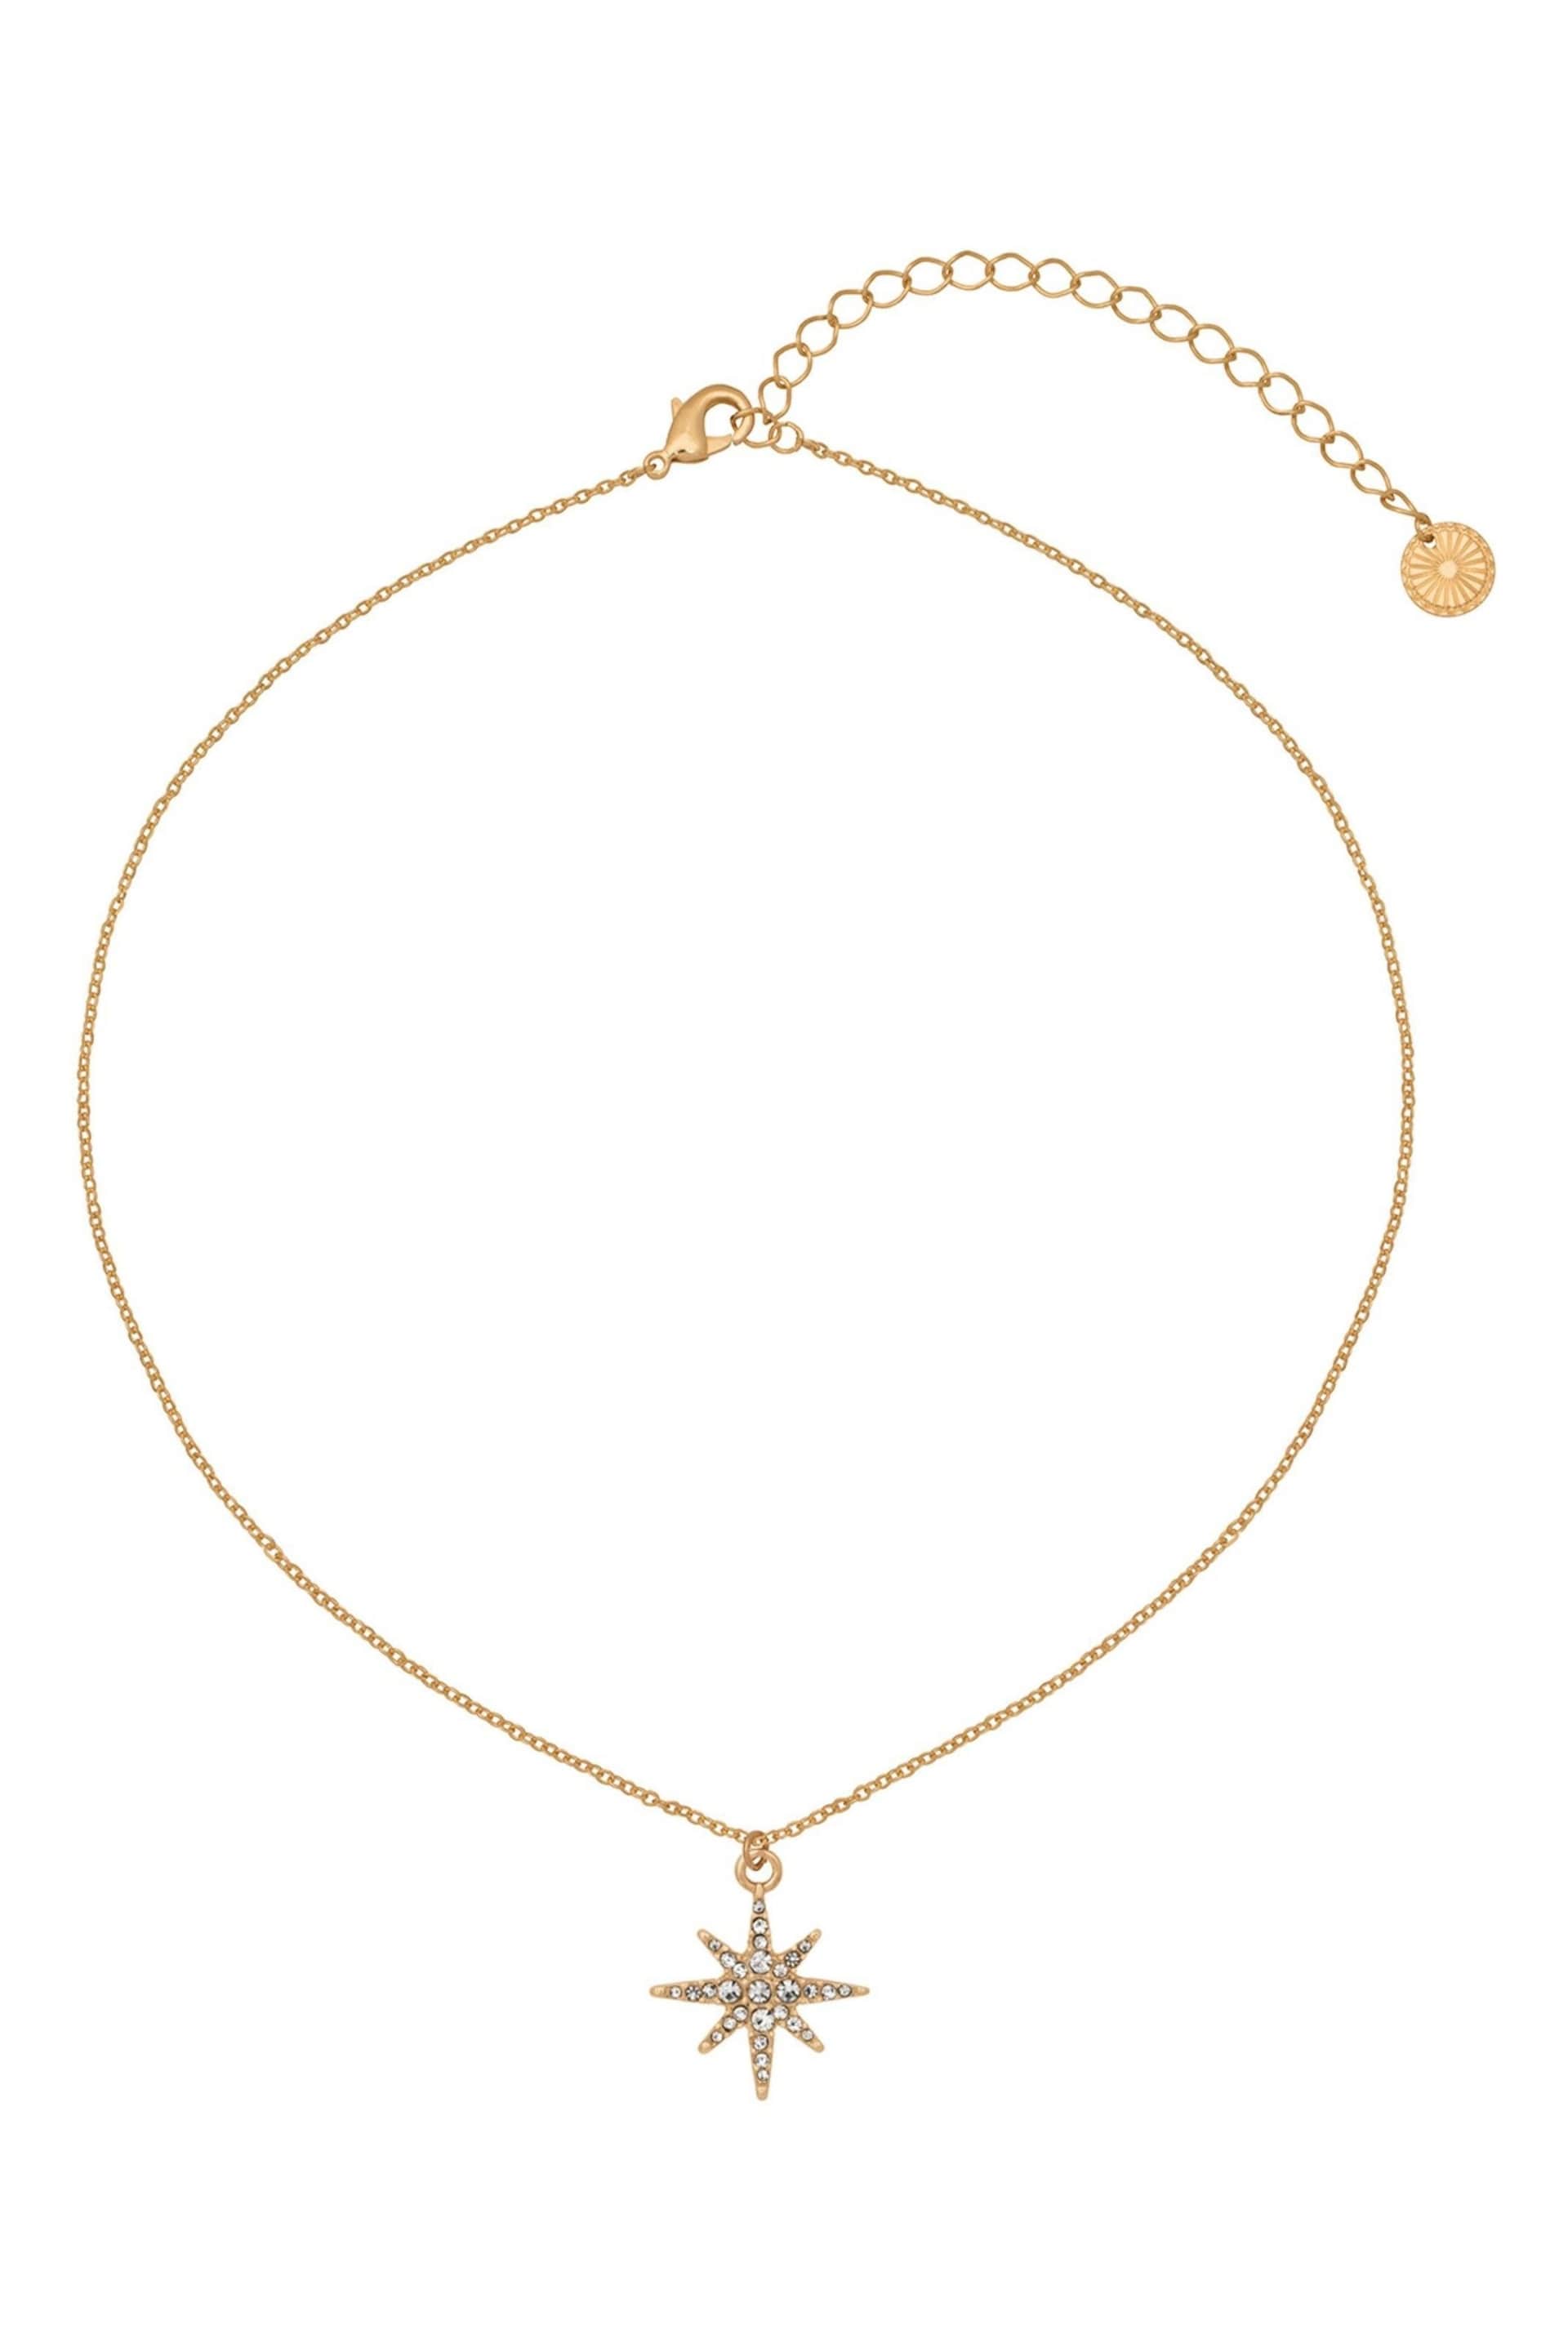 Caramel Jewellery London Gold Tone Superstar Necklace - Image 1 of 7